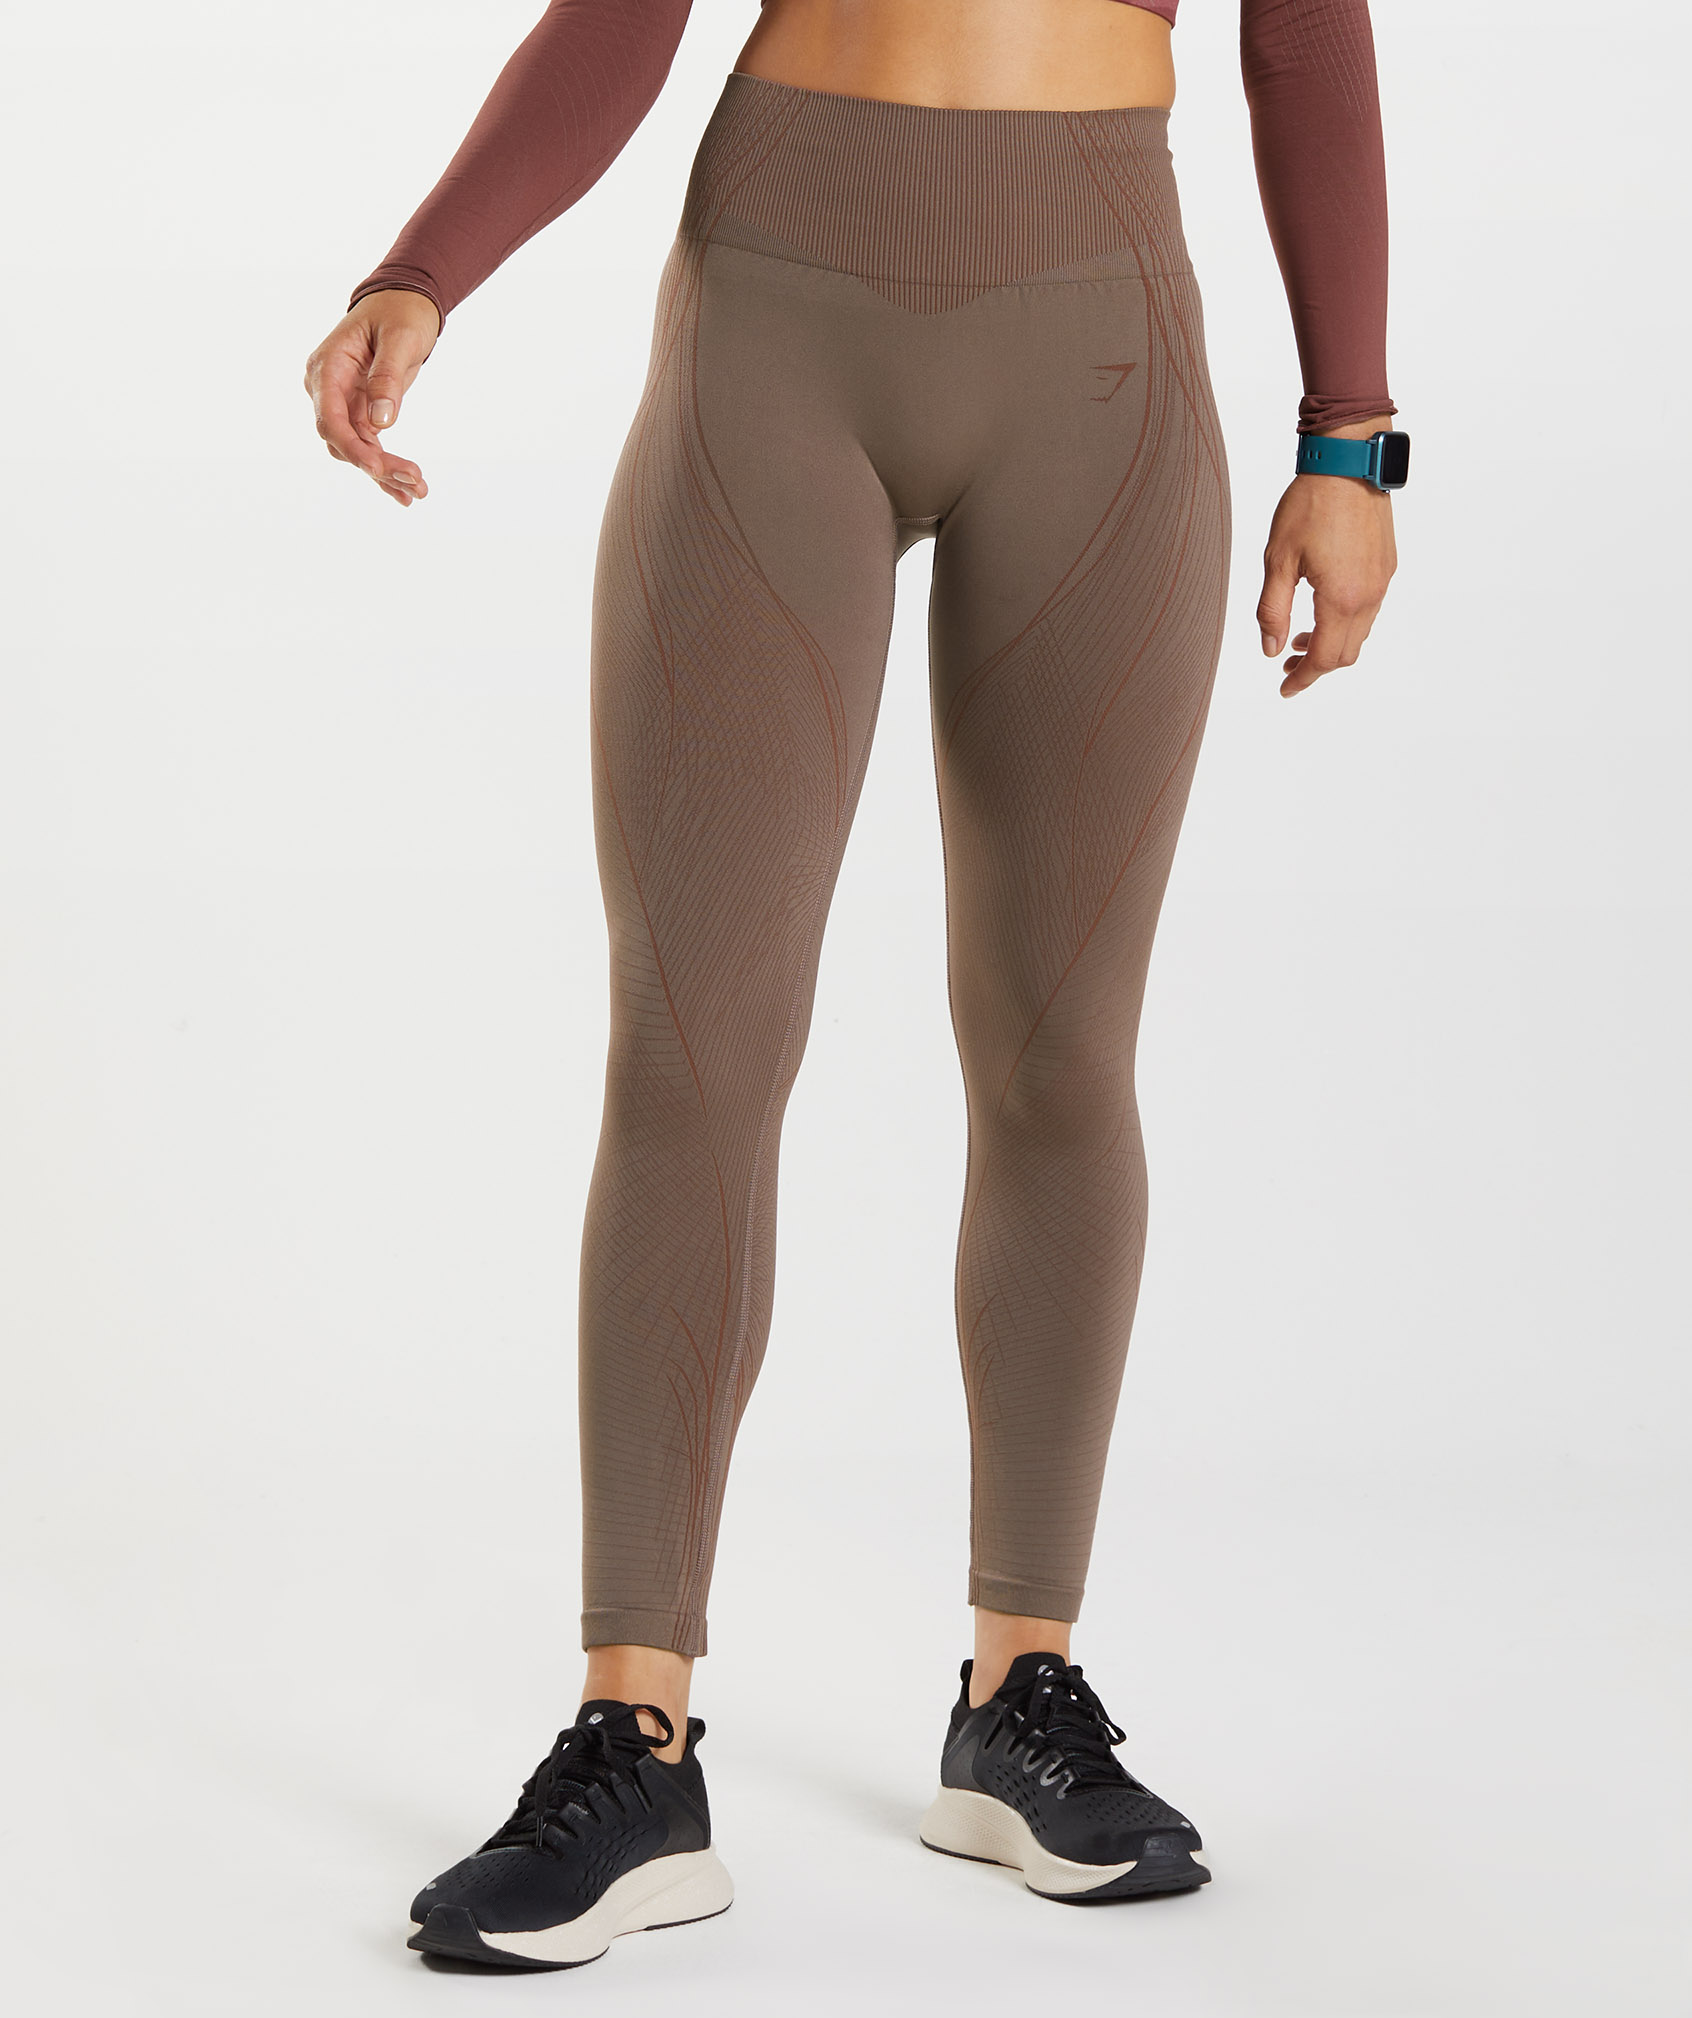 Gymshark Small(8-10)500/= ❗ SOLD 🔥 ❗ High-waisted Seamless leggings